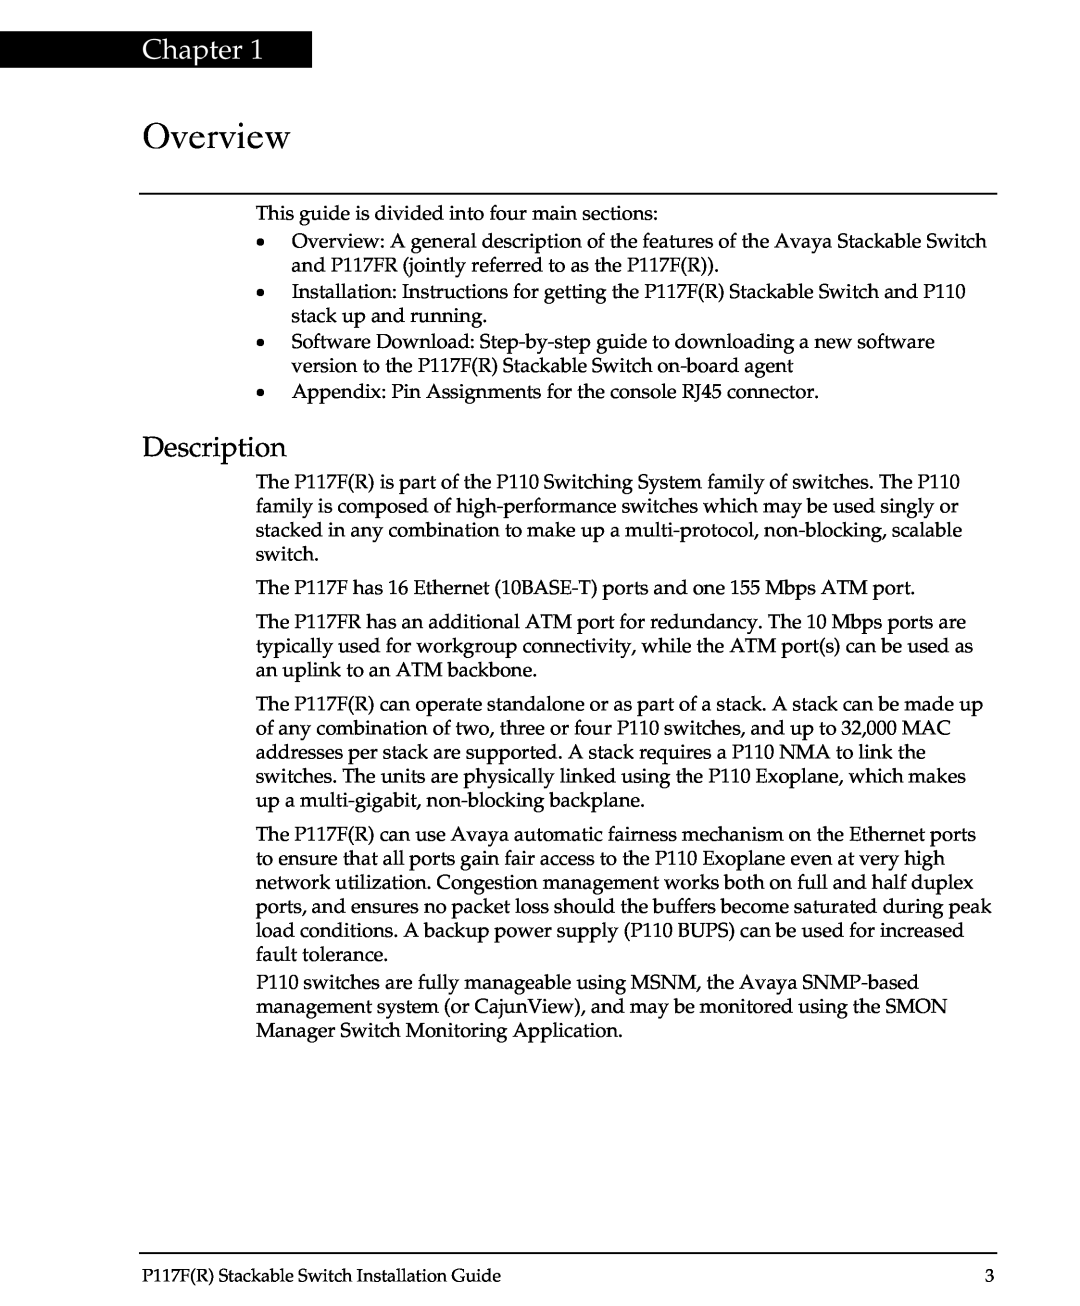 Avaya P117F(R) manual Overview, Chapter, Description 